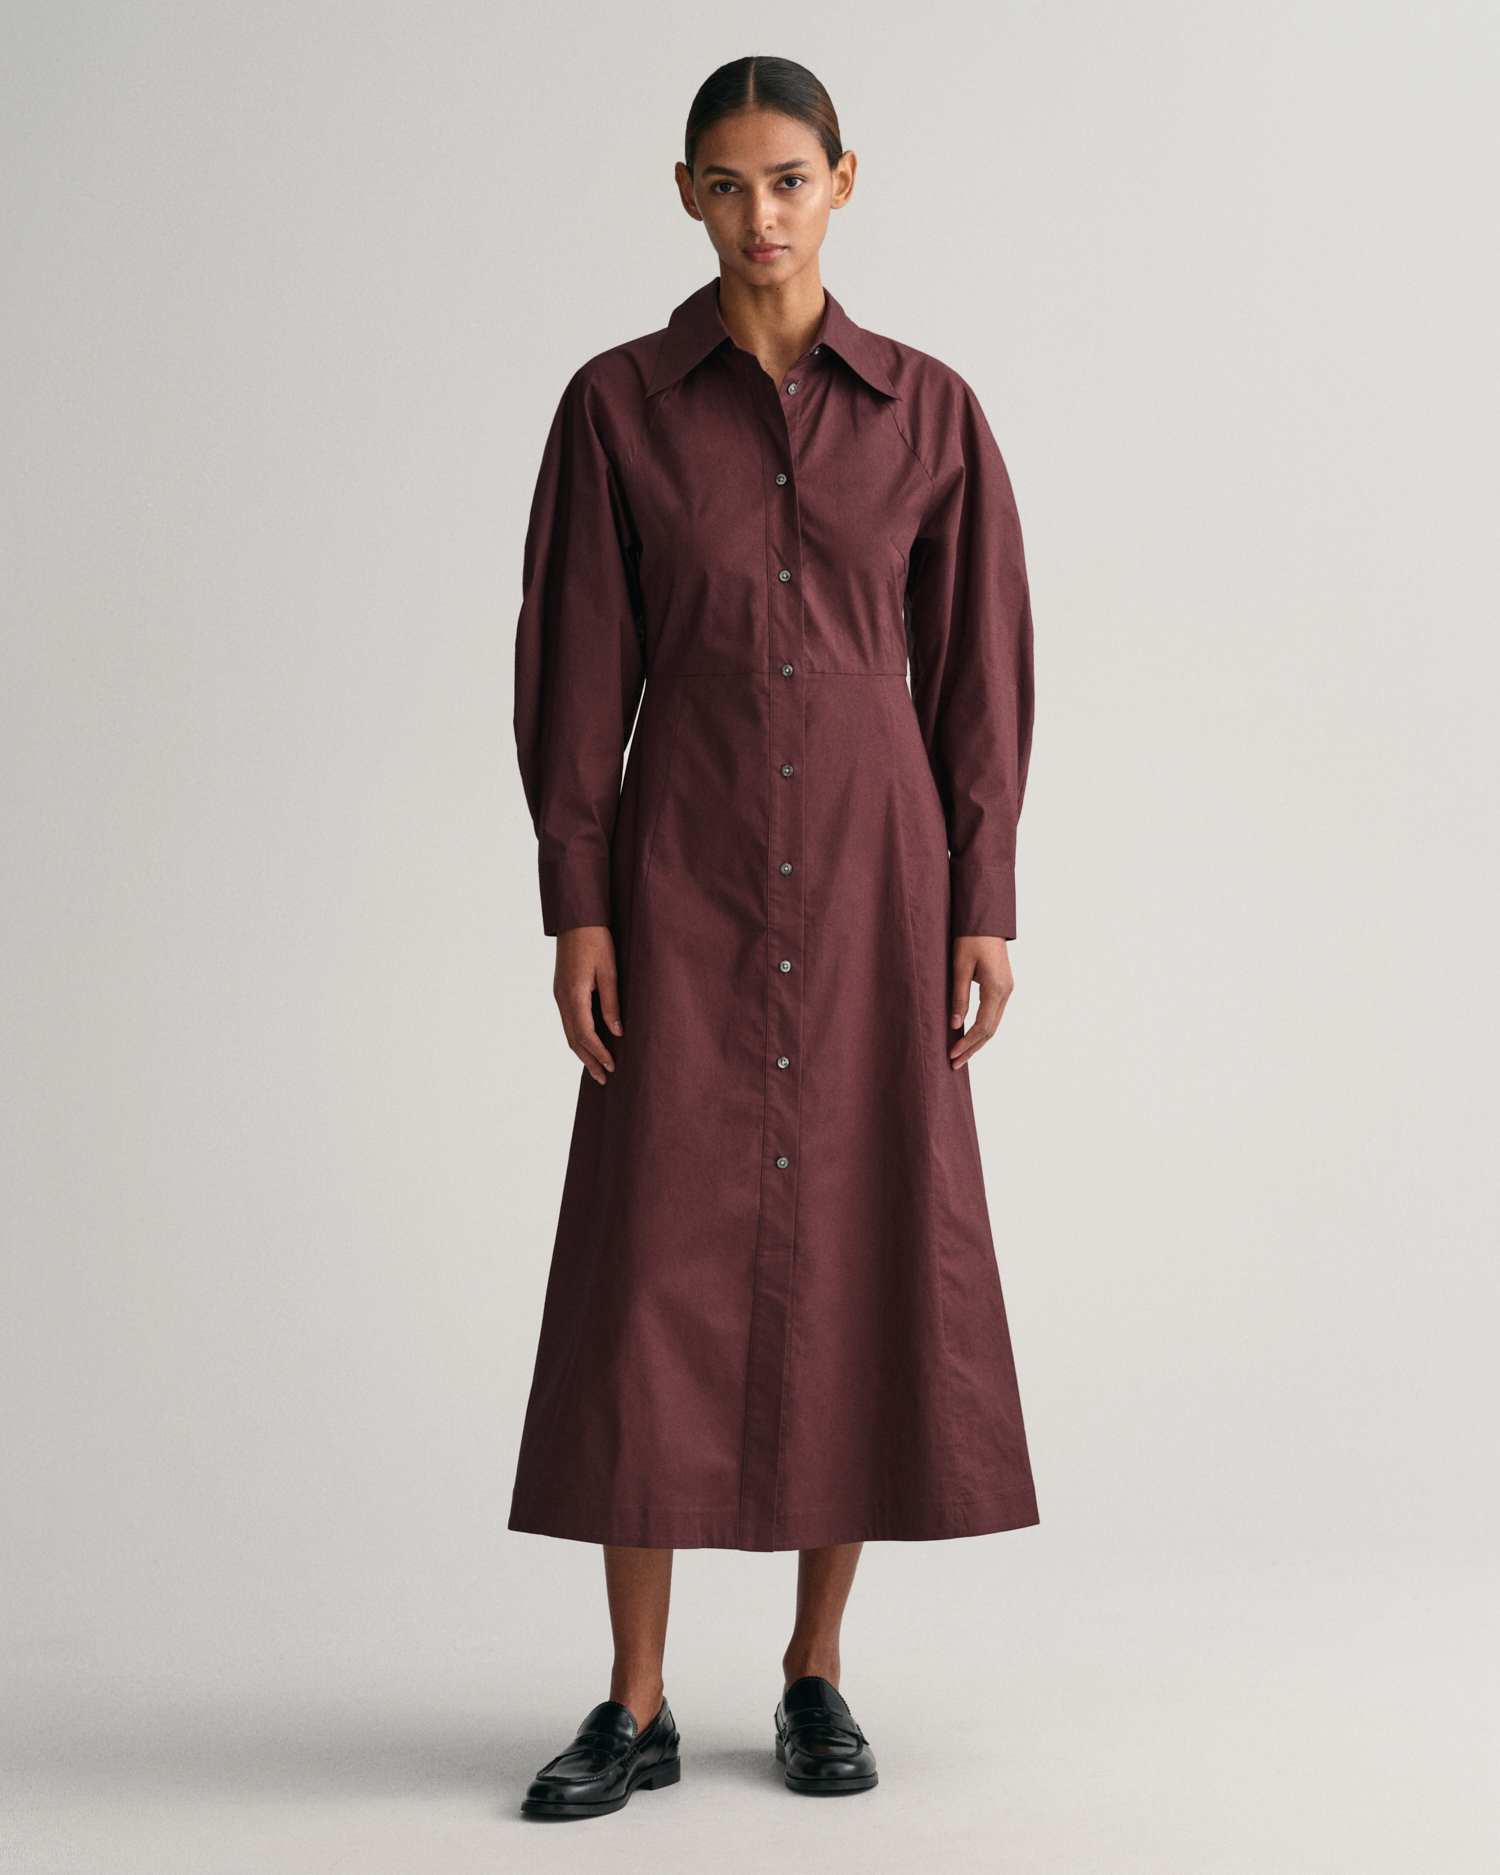 GANT Women Volume Sleeve Shirt Dress (44) Brown product